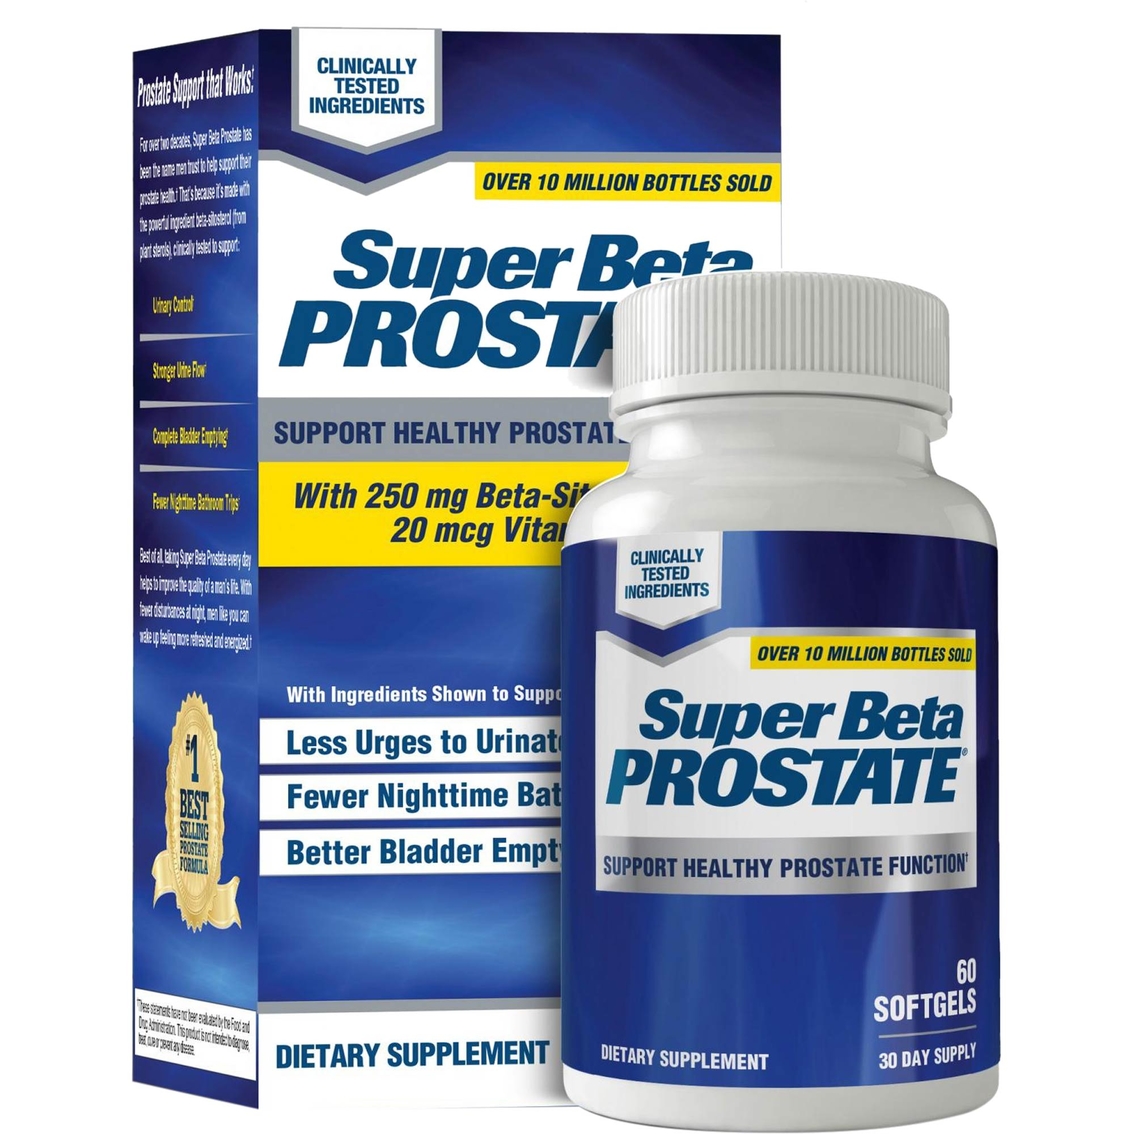 New Vitality Super Beta Prostate, 60 ct. - Image 2 of 2